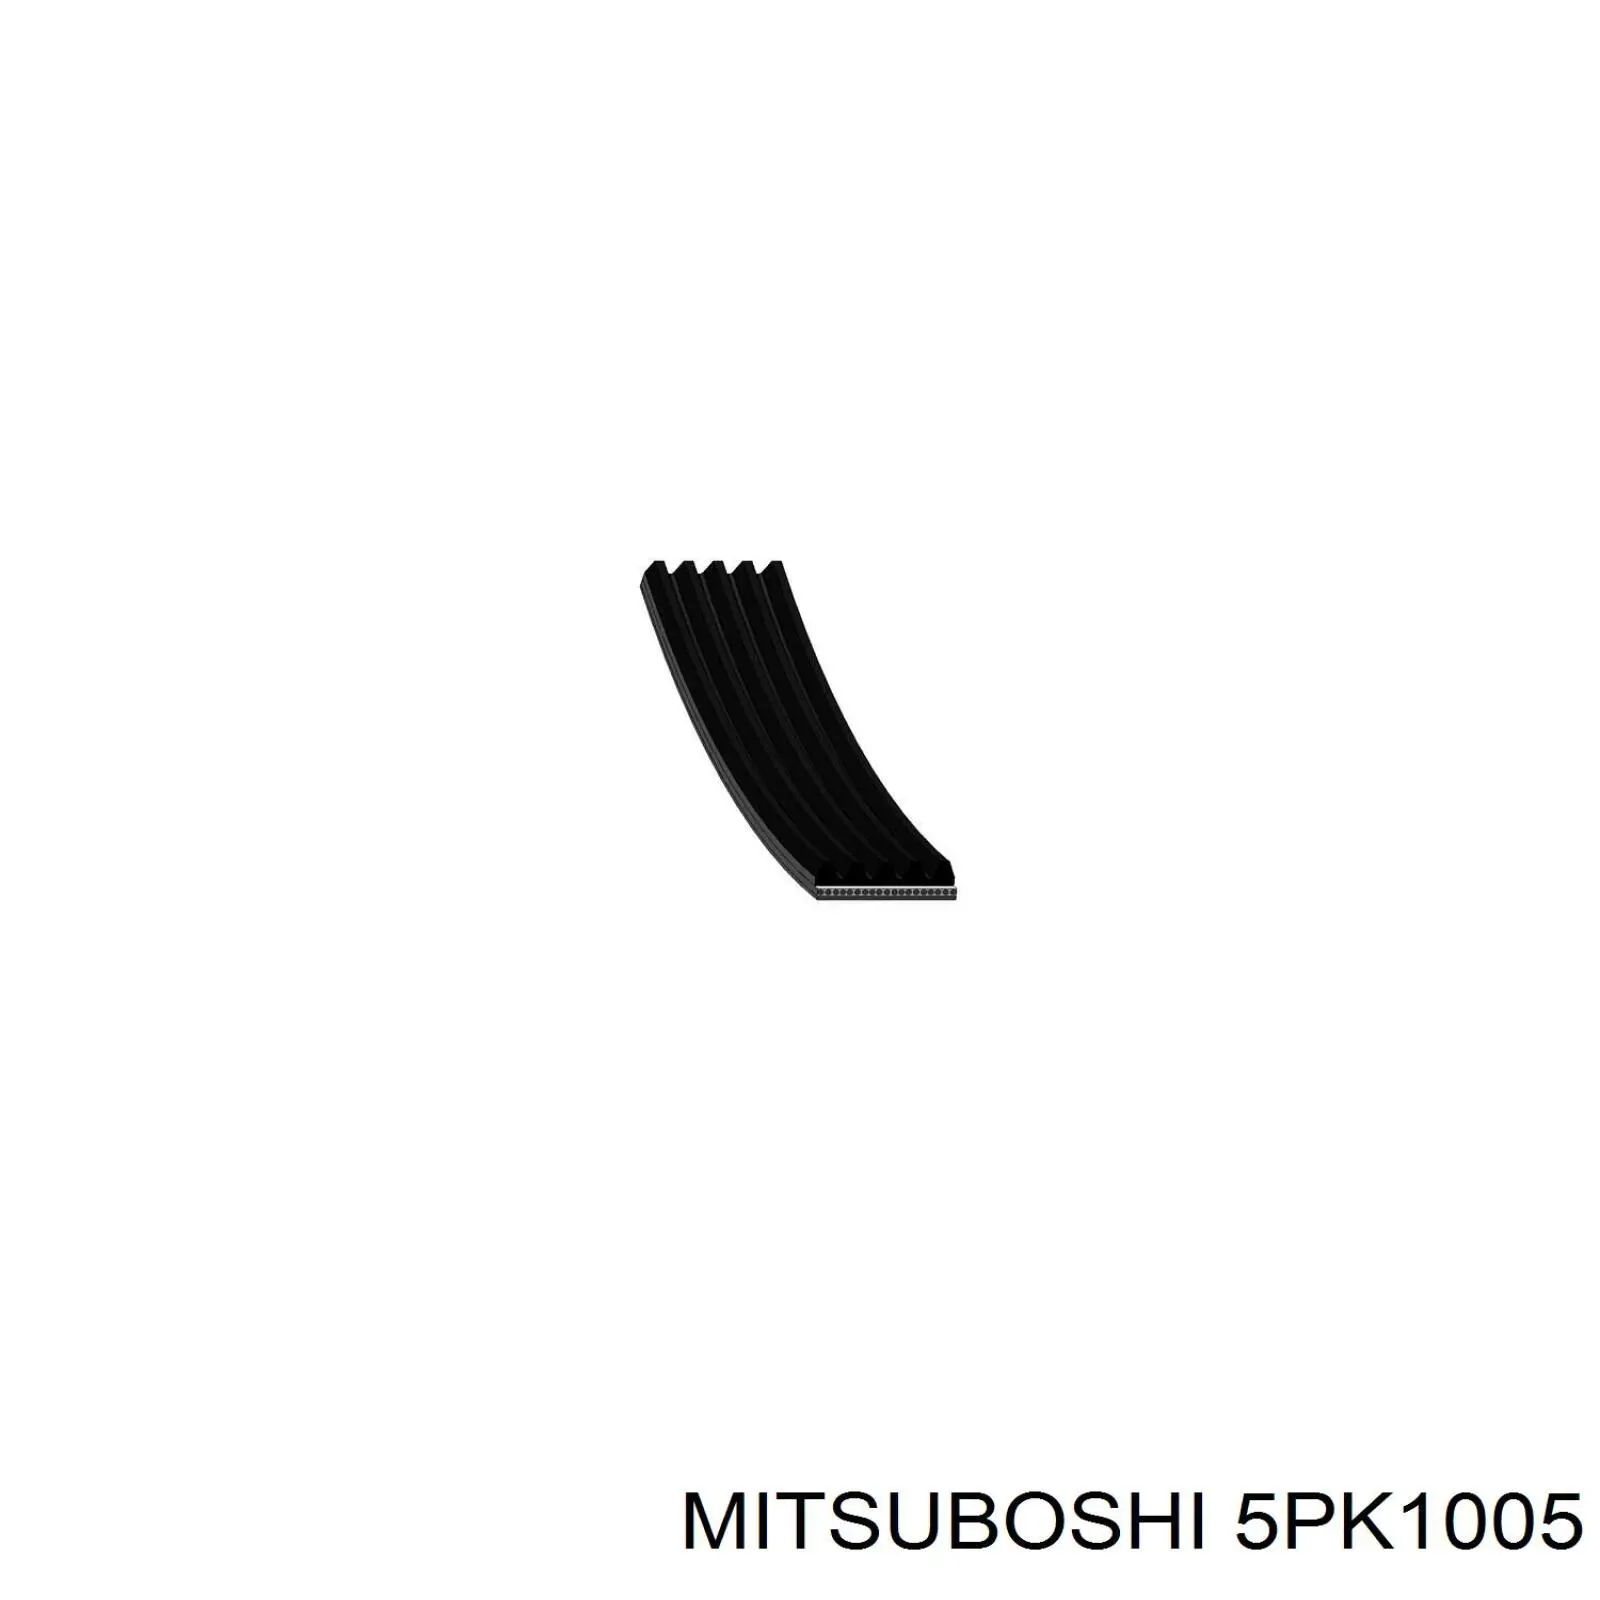 5PK1005 Mitsuboshi ремень генератора